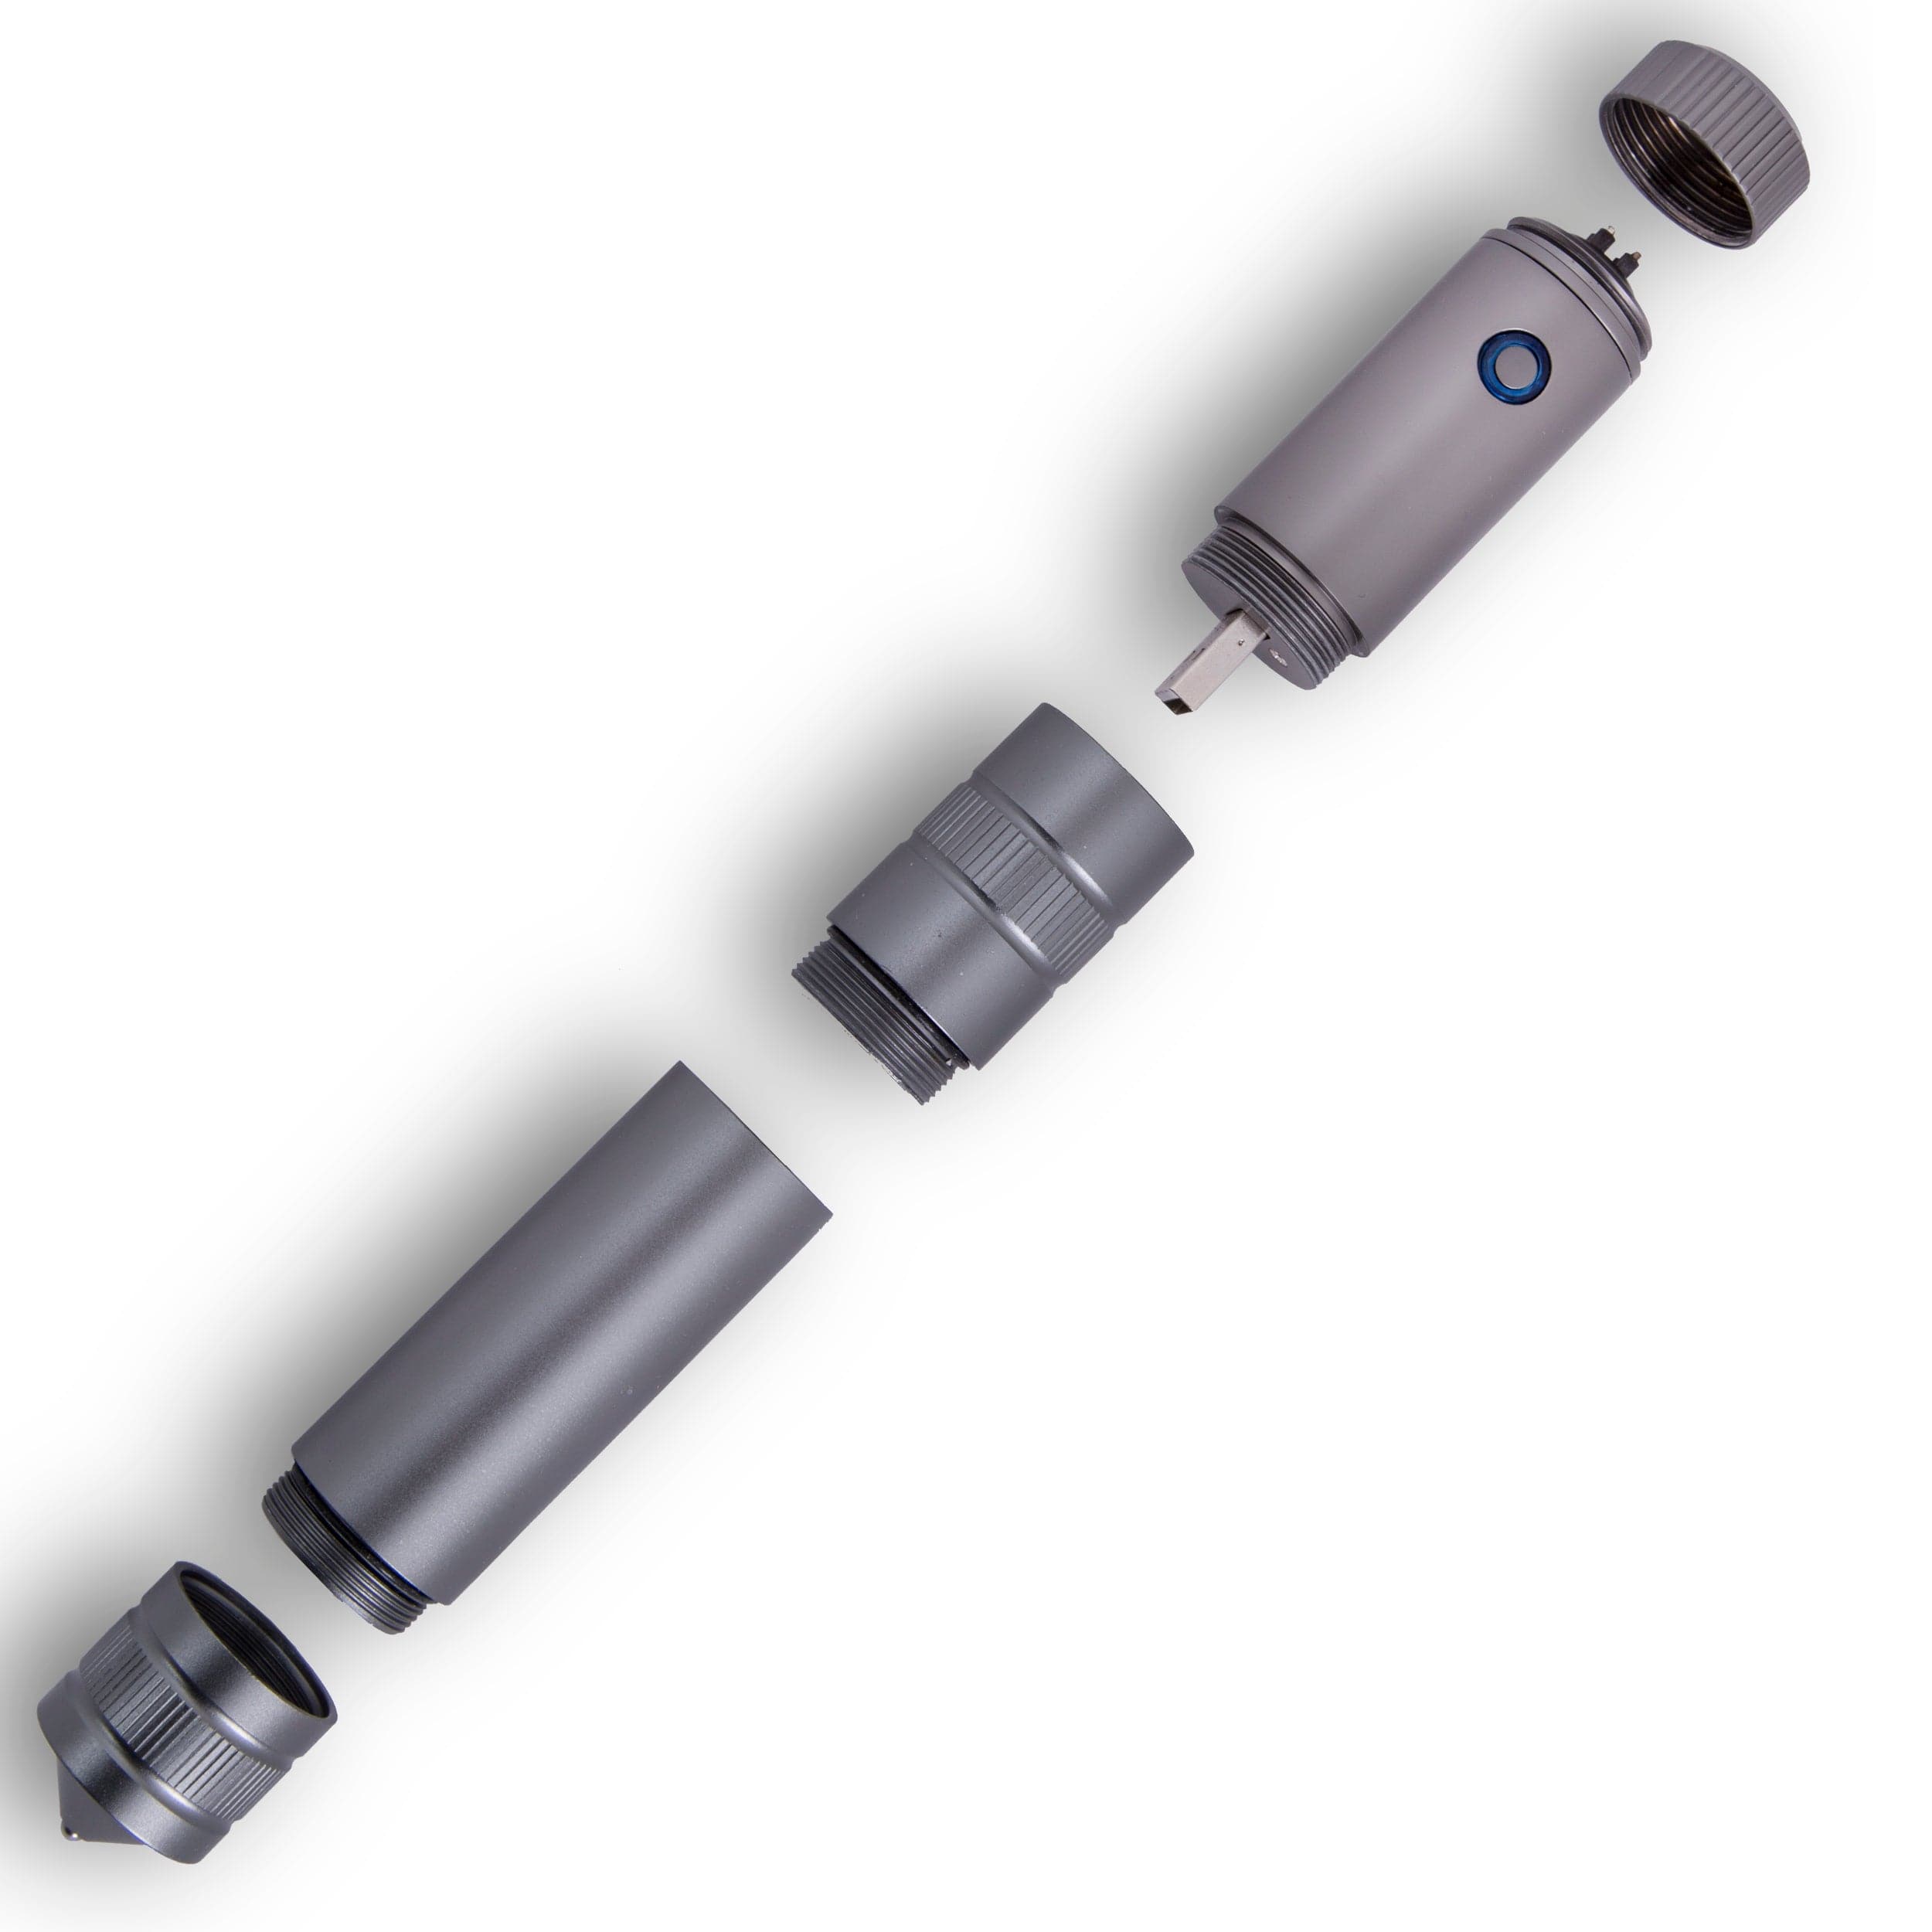 Cross Fire Dual-Arc Plasma Lighter by InstaFire